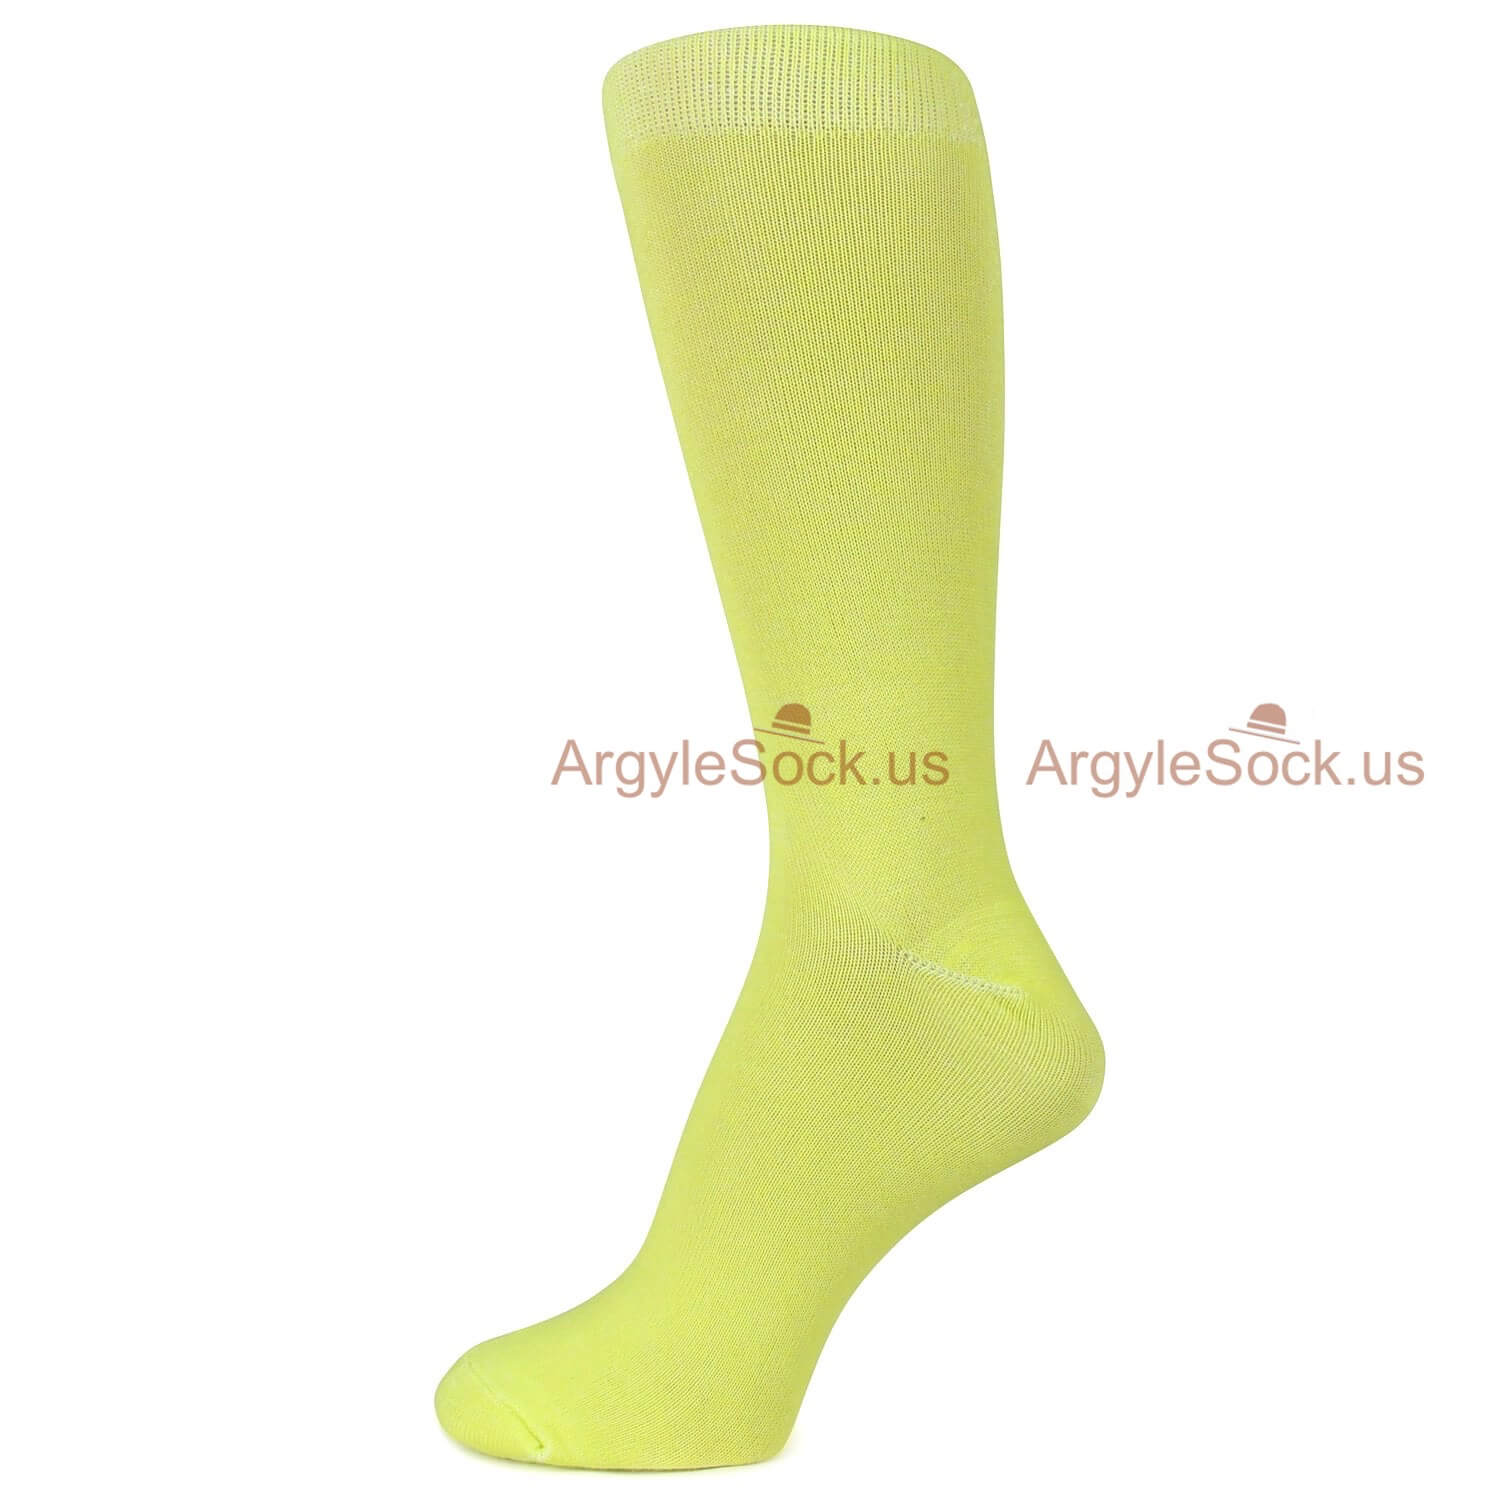 FBF Originals Mens Argyle Lineup Football Dress Socks Size X-Large 13-15 XL Extra Large 